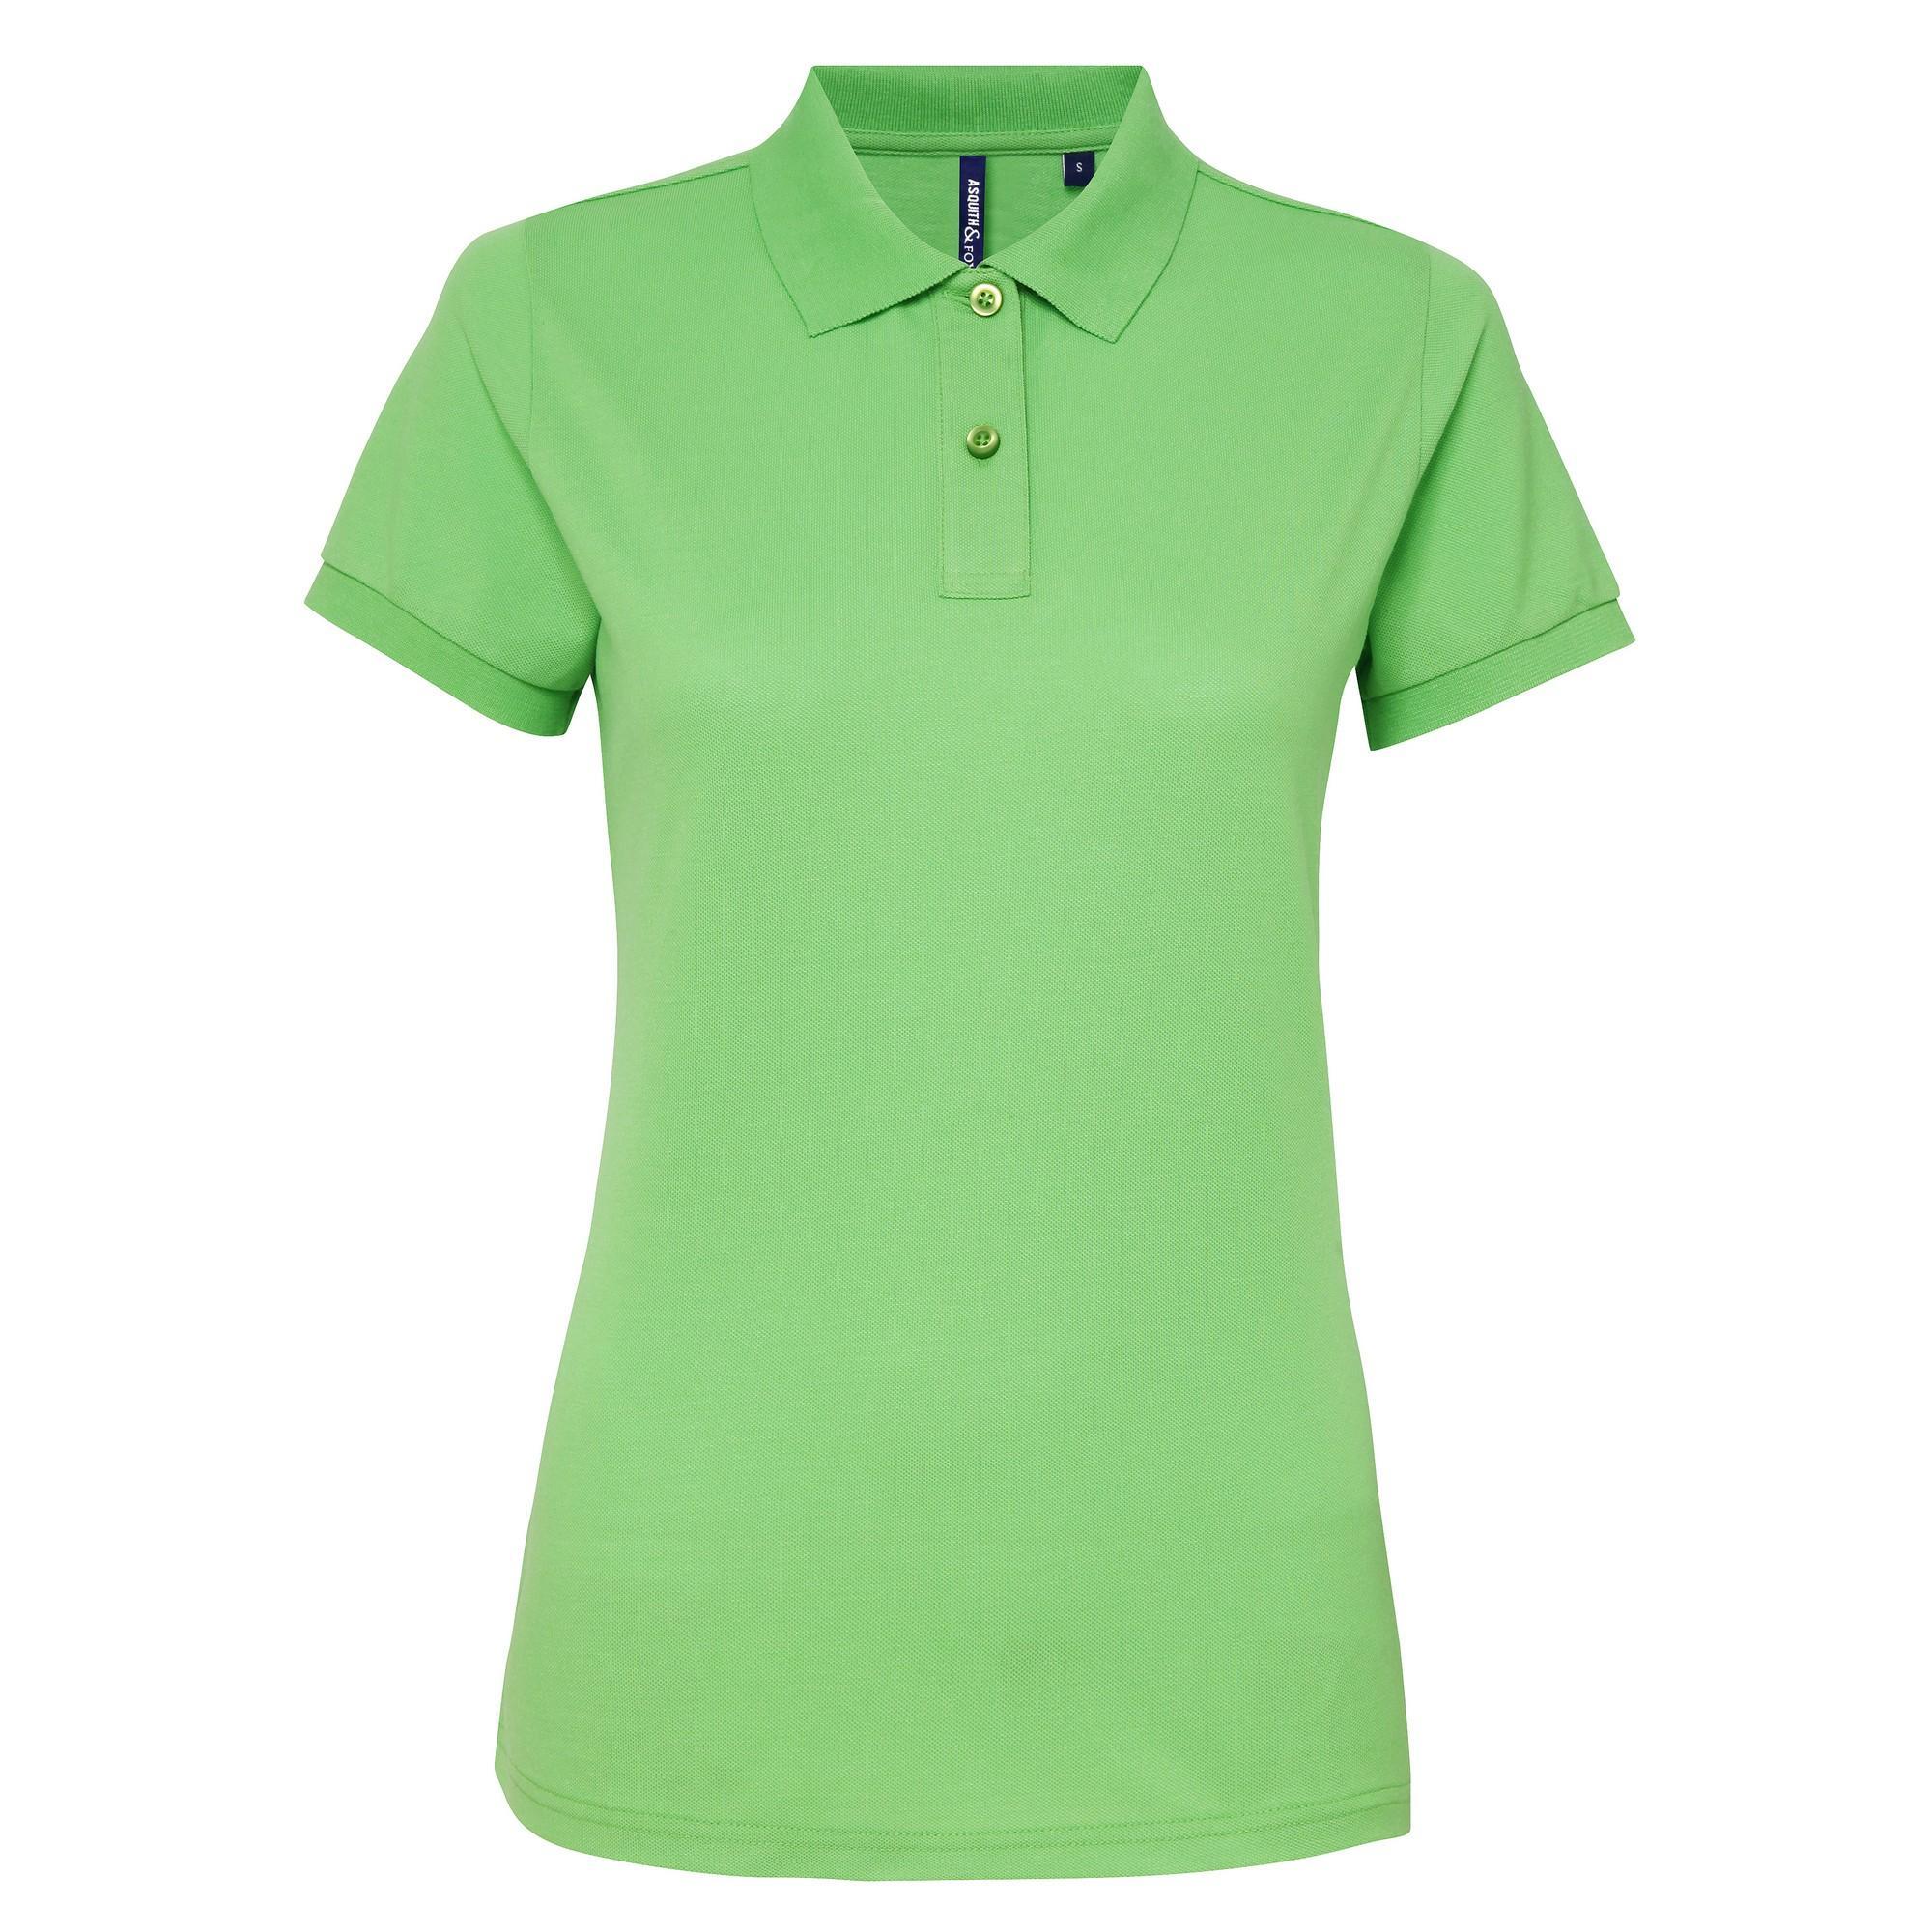 Asquith & Fox Womens/Ladies Short Sleeve Performance Blend Polo Shirt (Lime) (L)